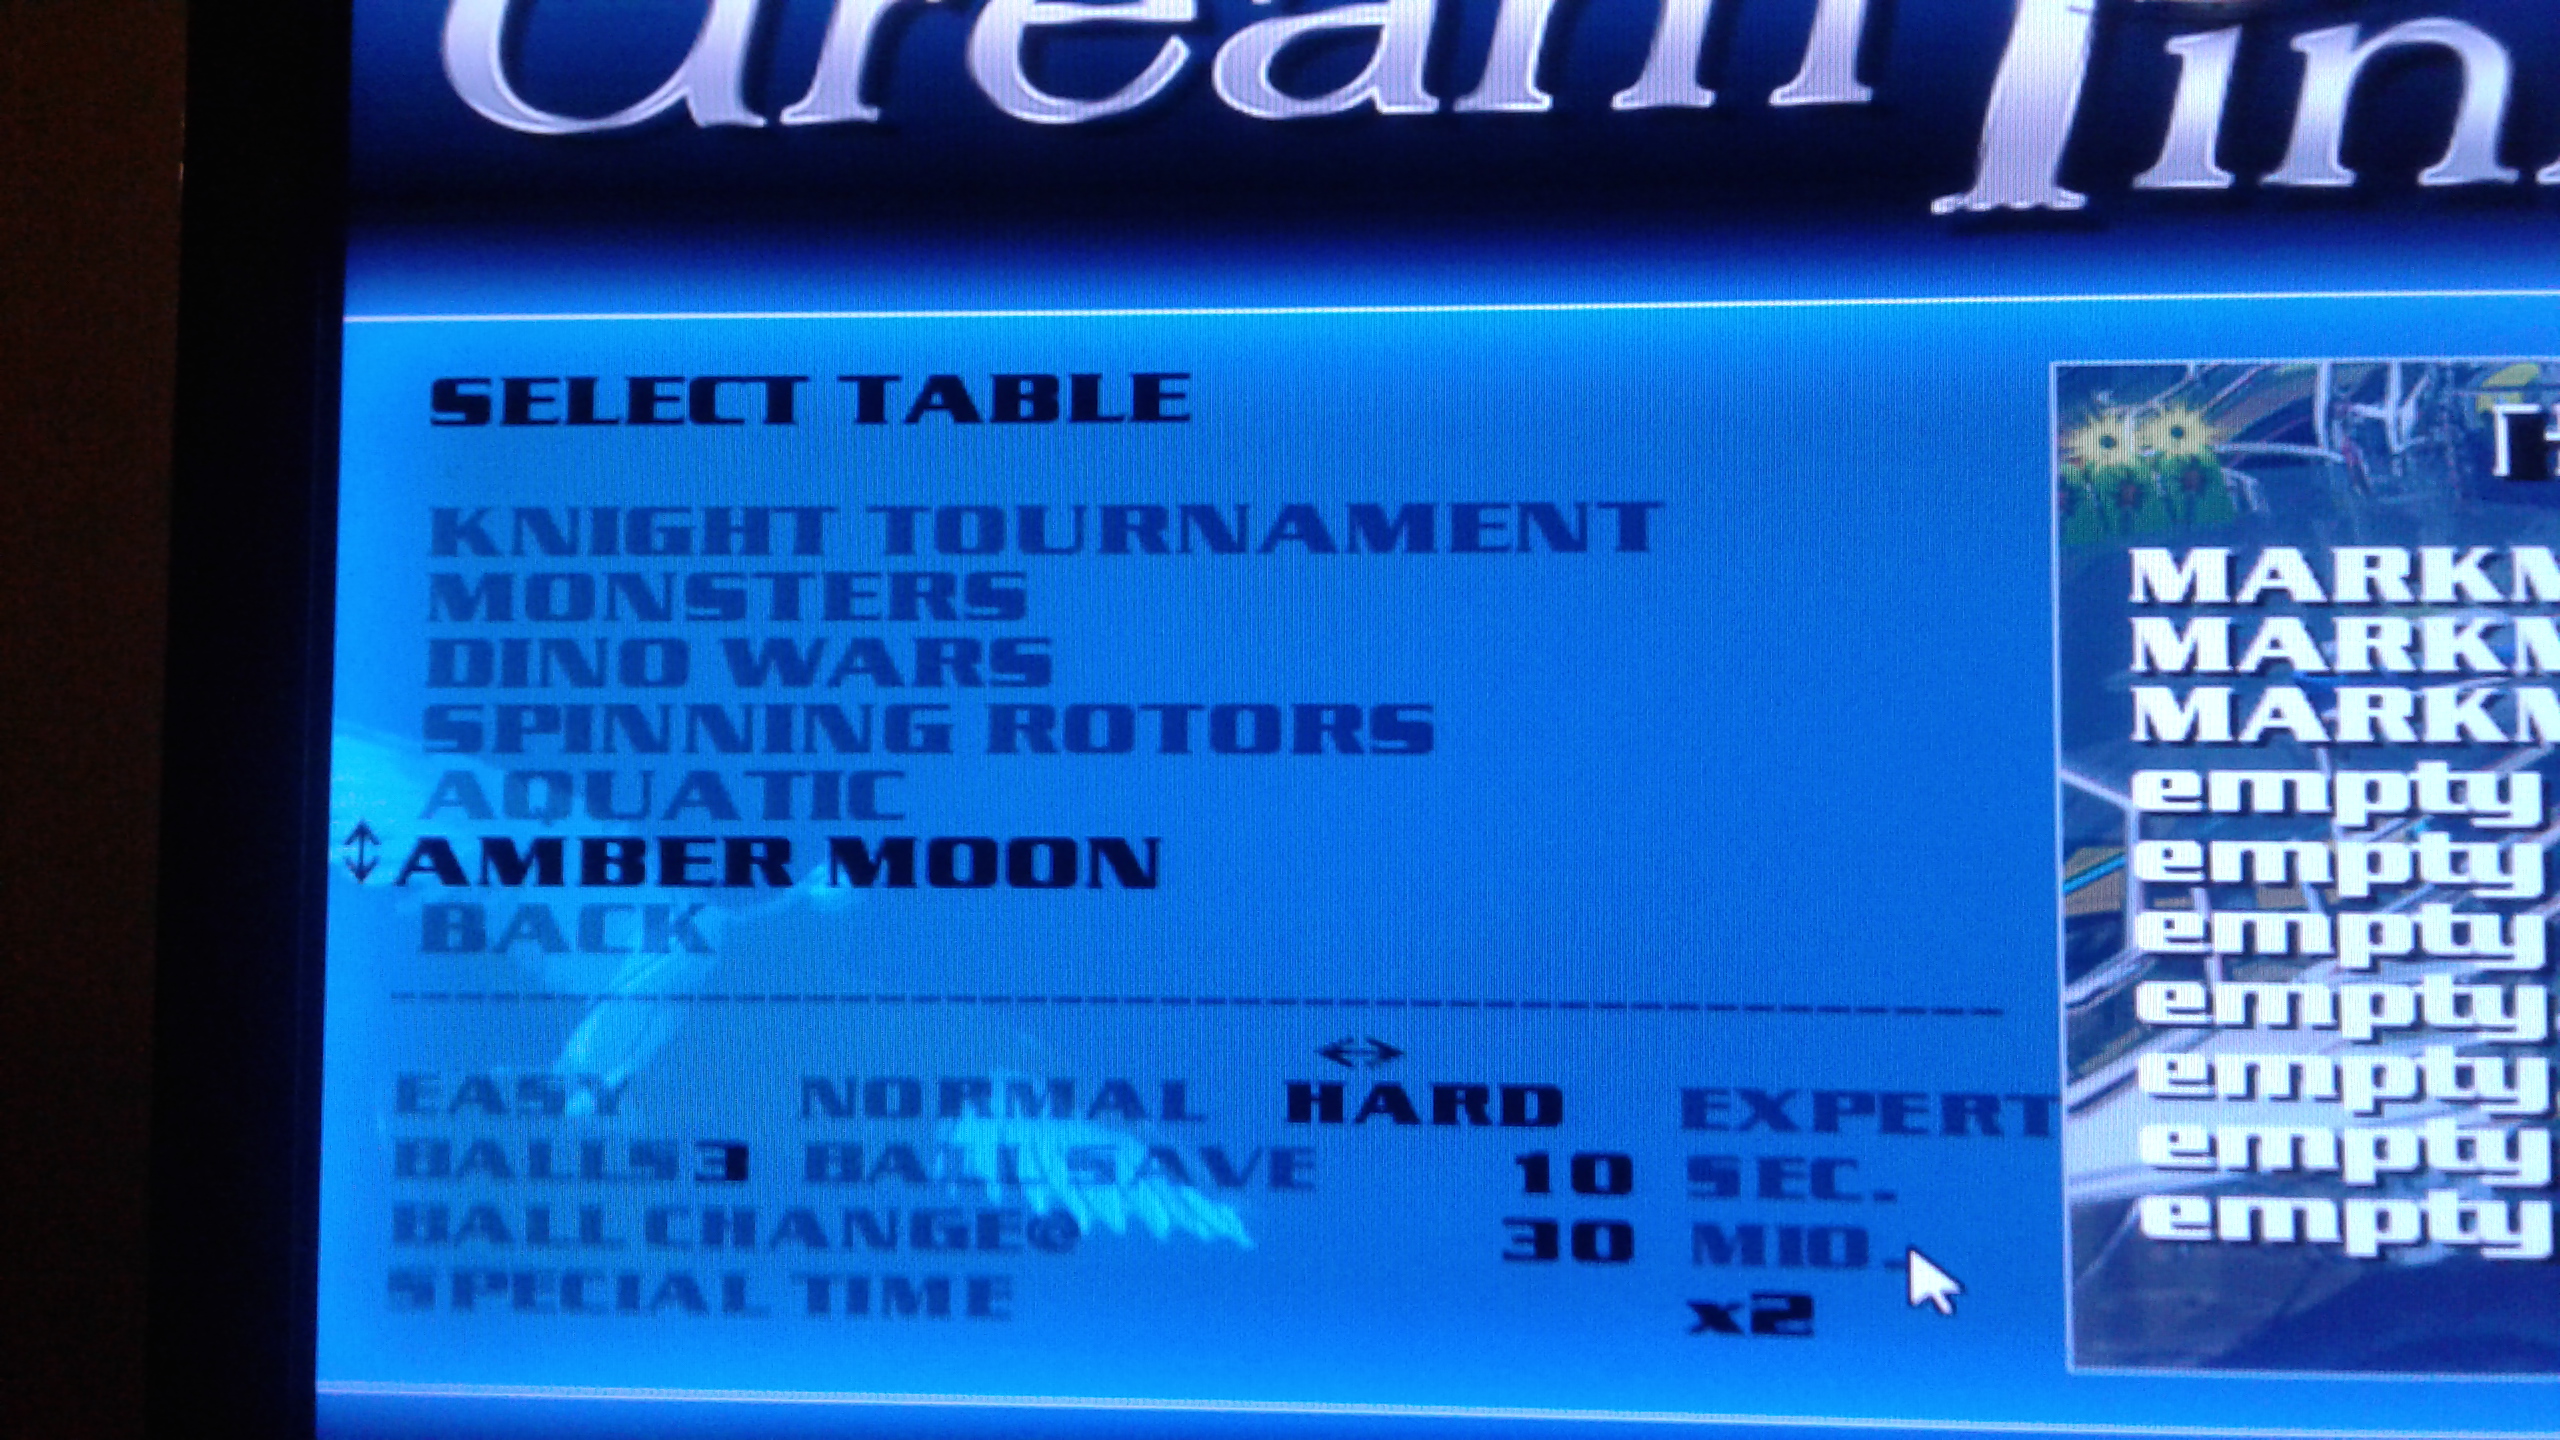 Mark: Dream Pinball 3D: Amber Moon [Hard] (PC Emulated / DOSBox) 370,361,610 points on 2019-05-18 01:38:50